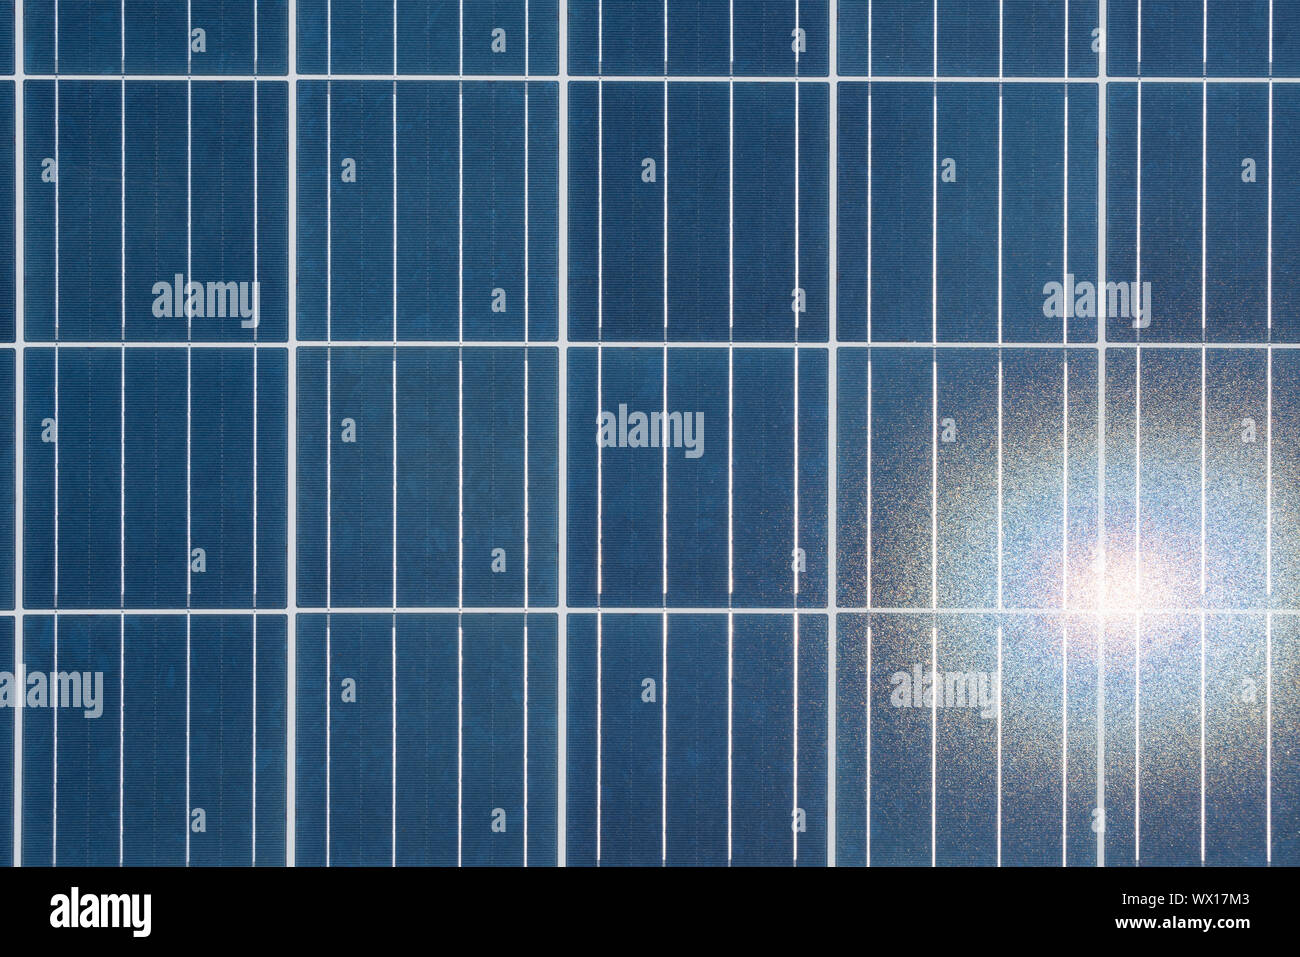 solar panels closeup Stock Photo